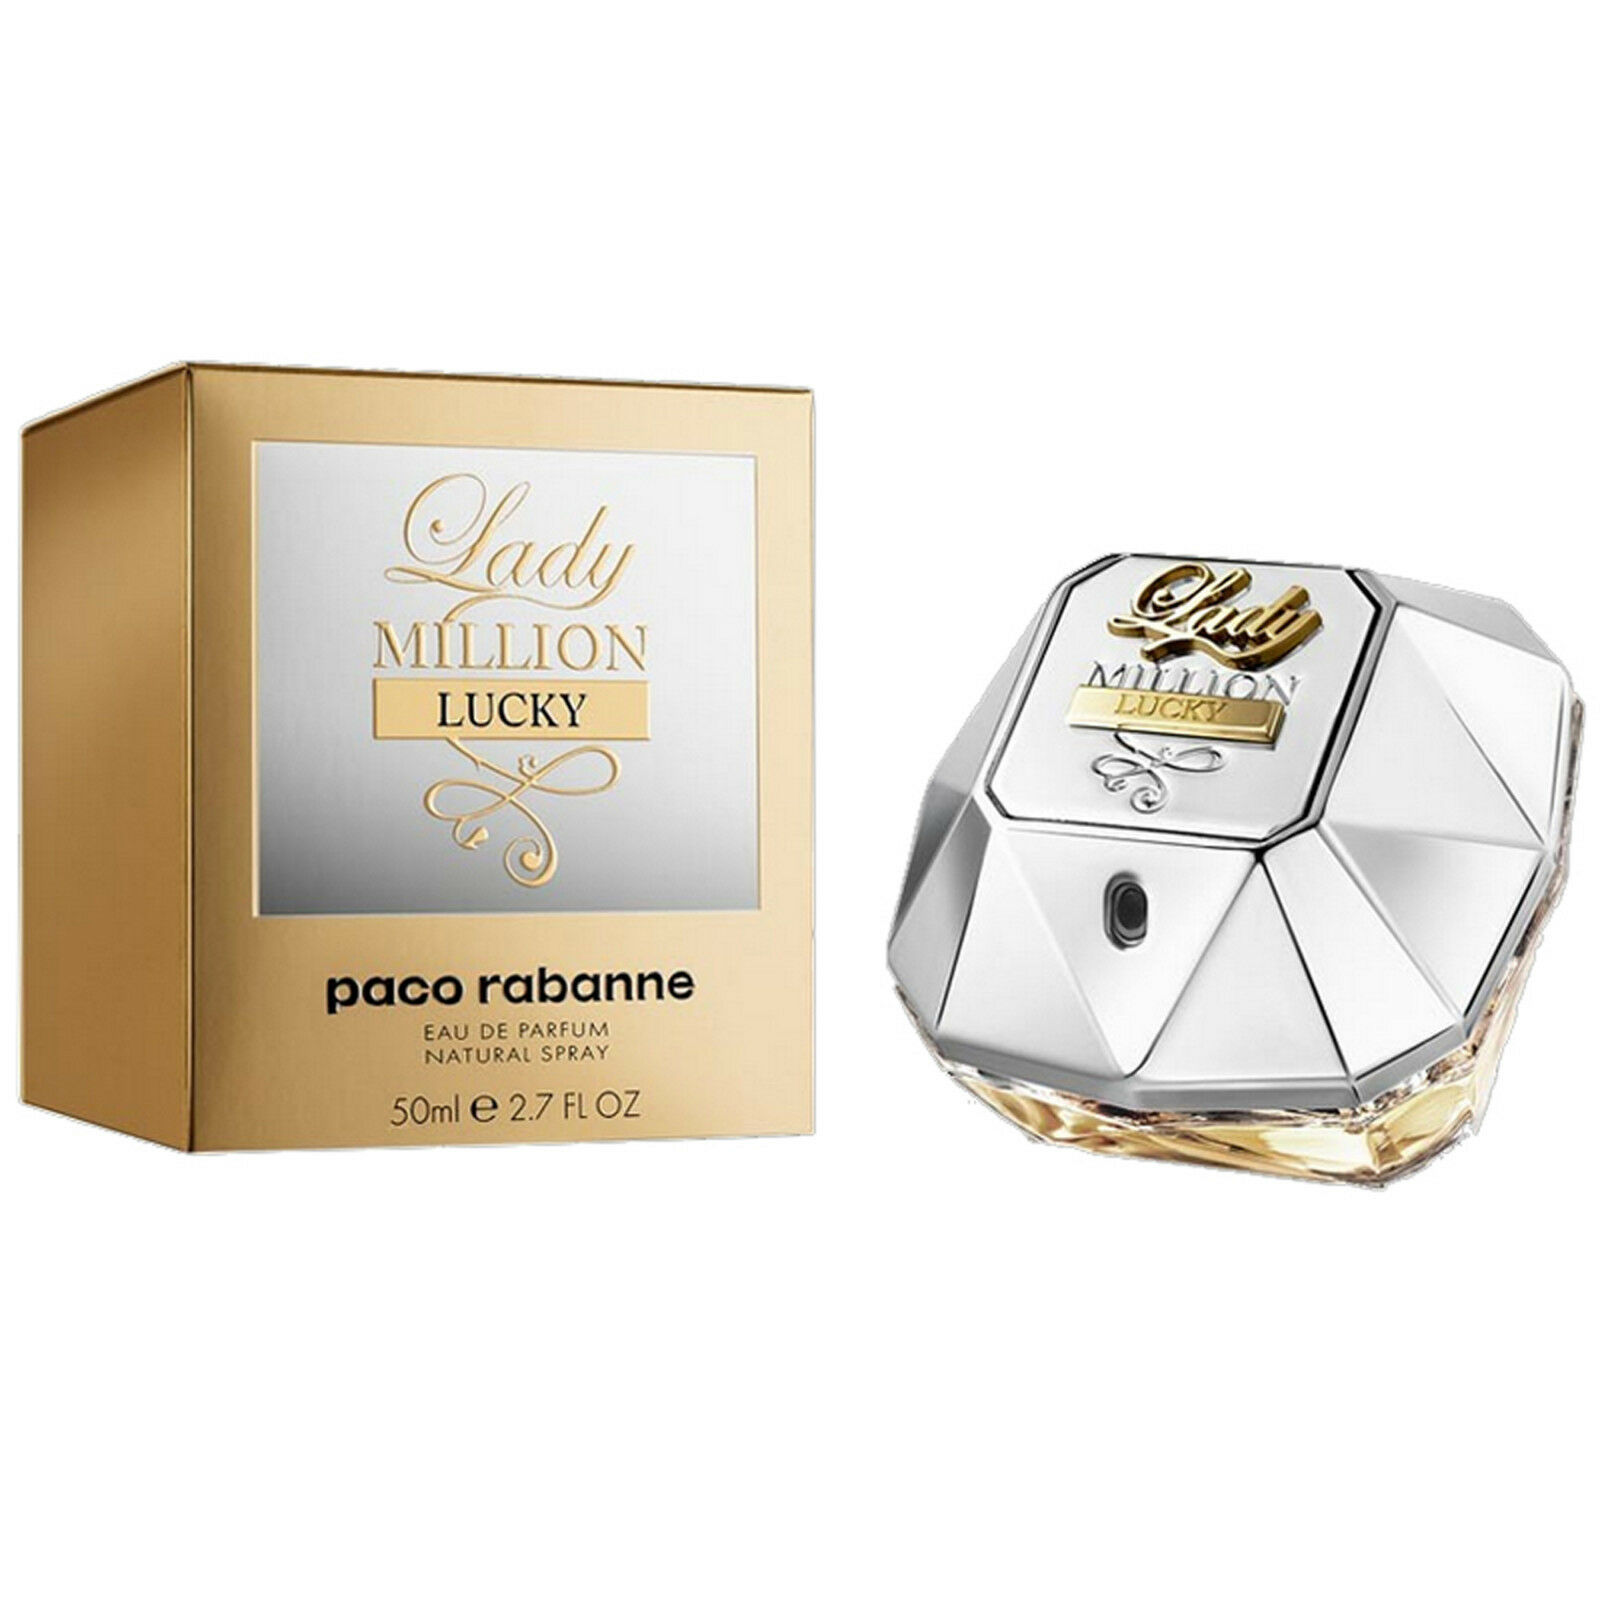 Lady Million Lucky by Paco Rabanne for Women - 50 ml Eau de Parfum Spray